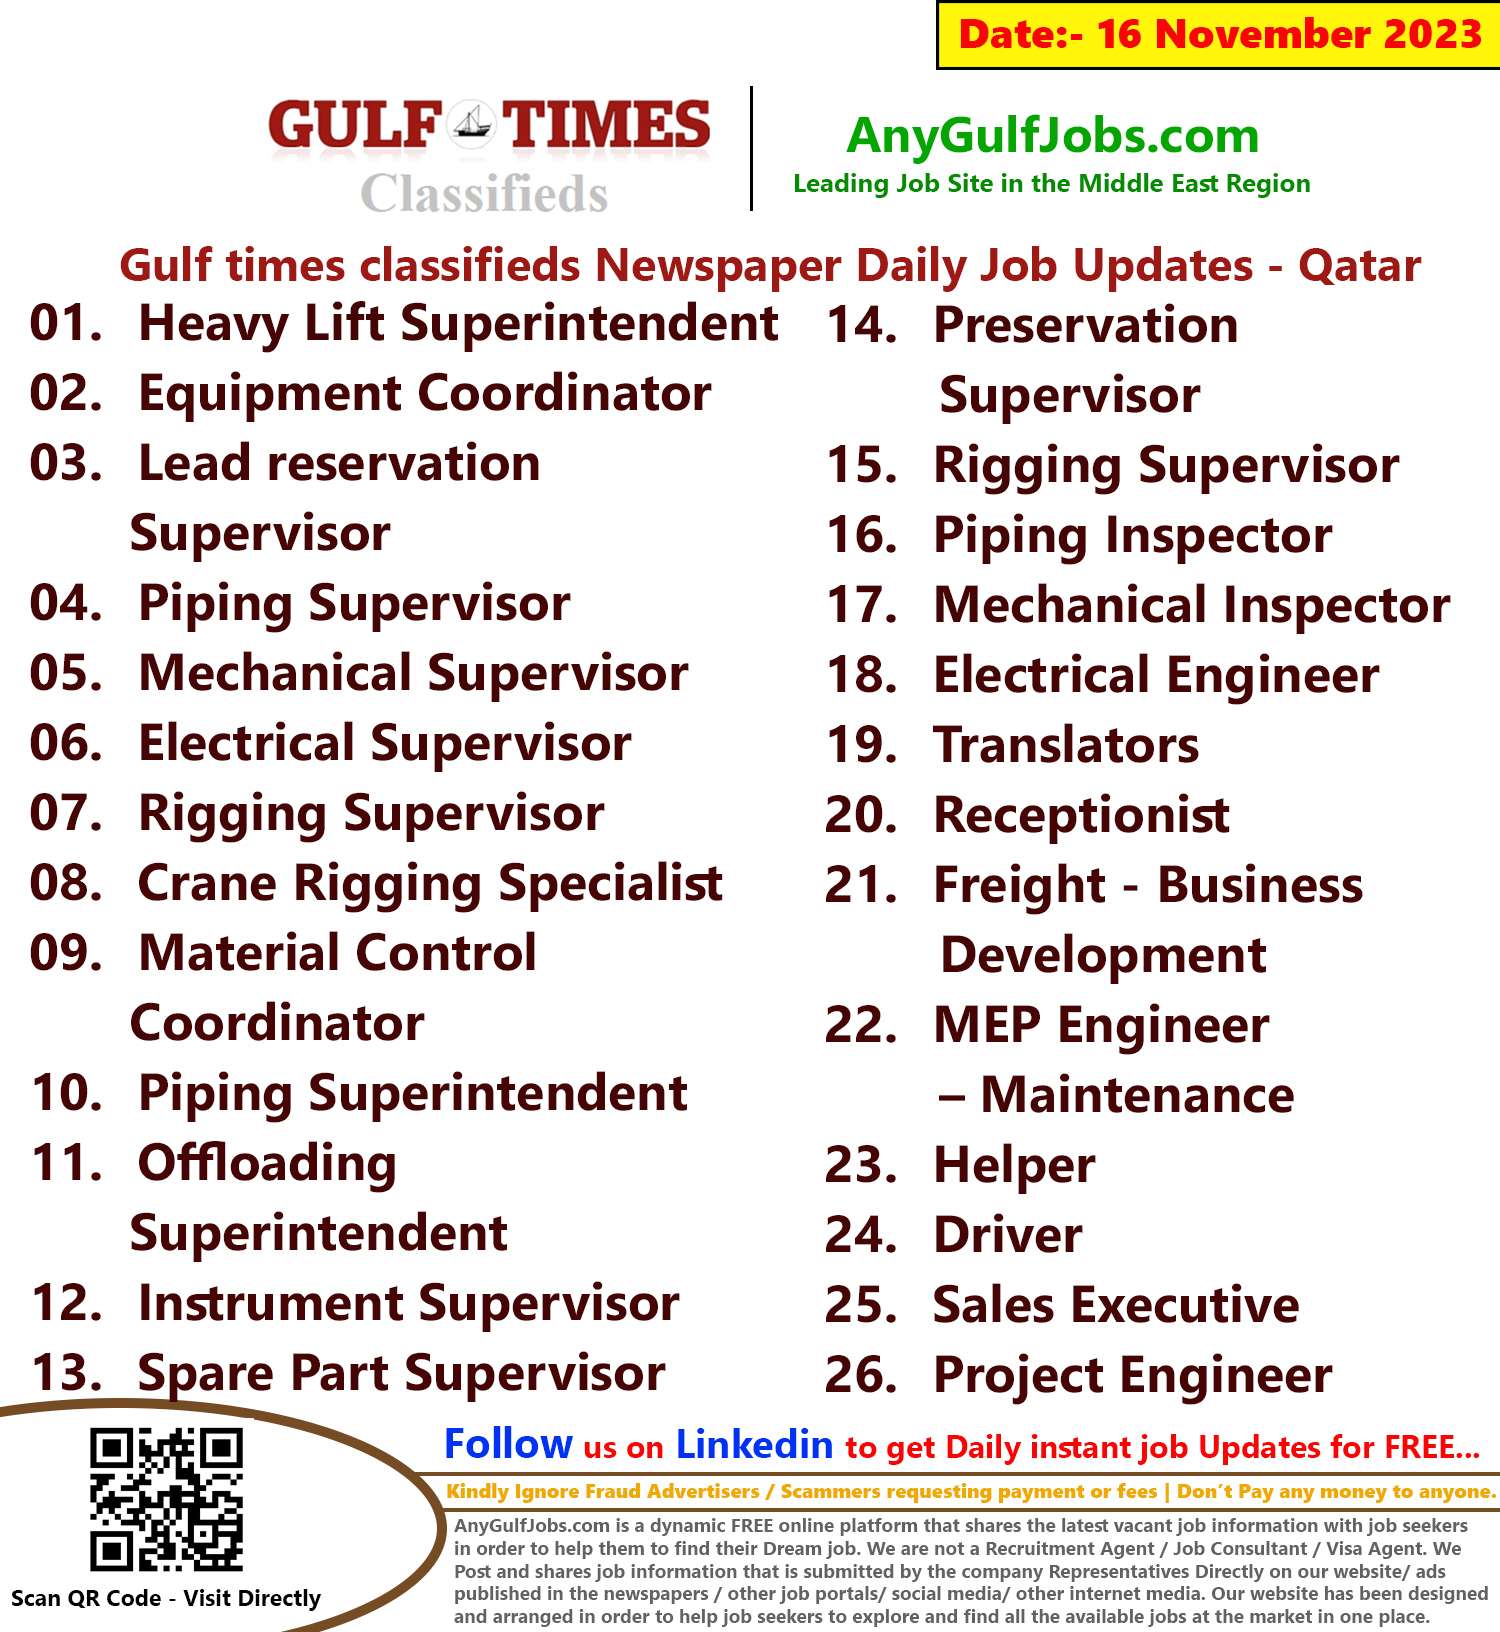 Gulf times classifieds Job Vacancies Qatar - 16 November 2023